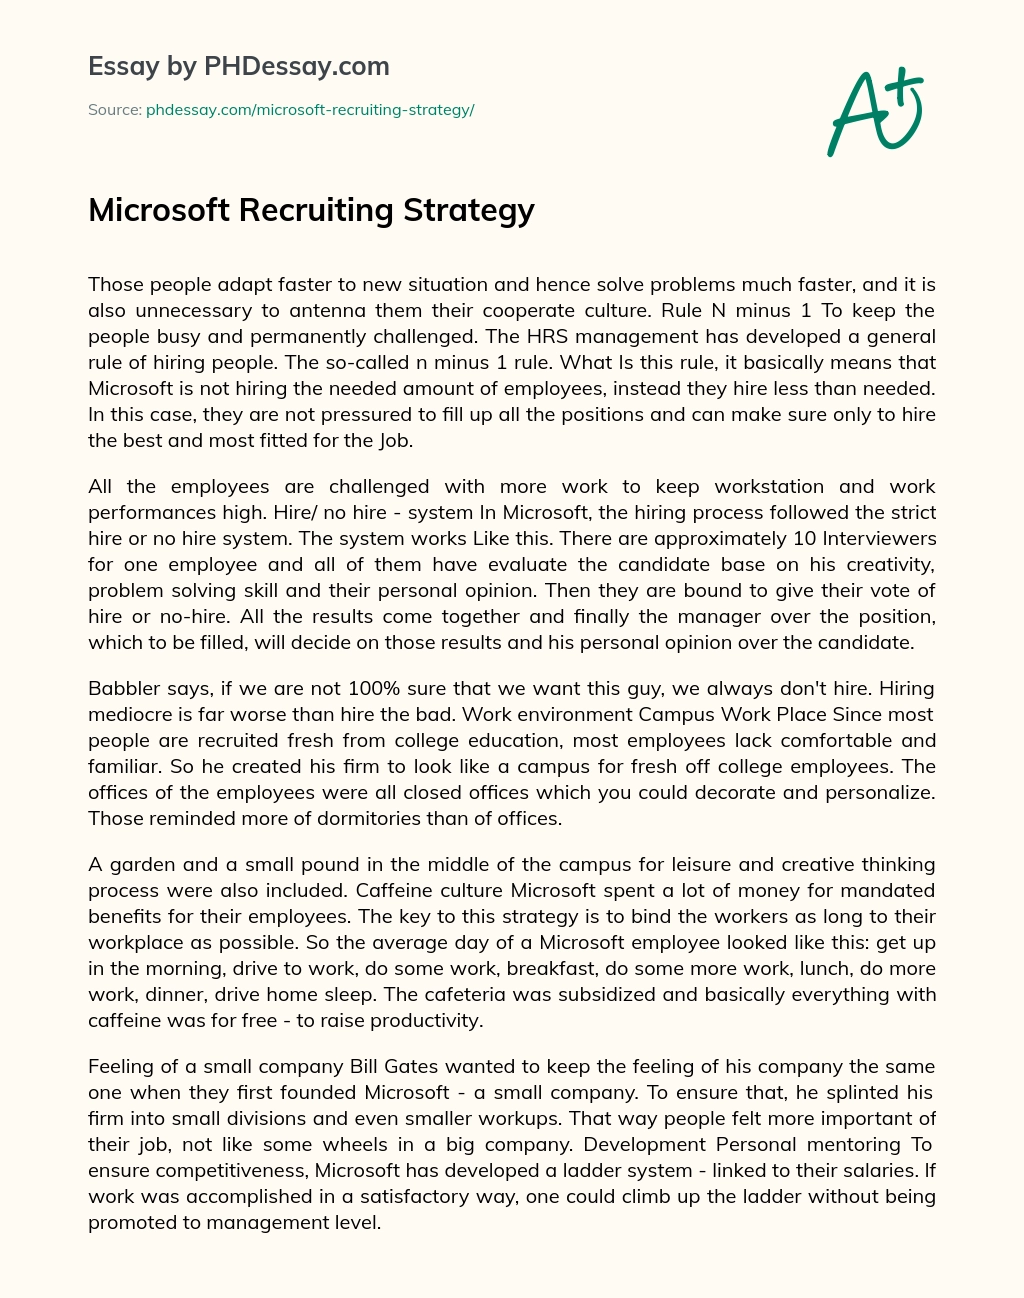 Microsoft Recruiting Strategy essay